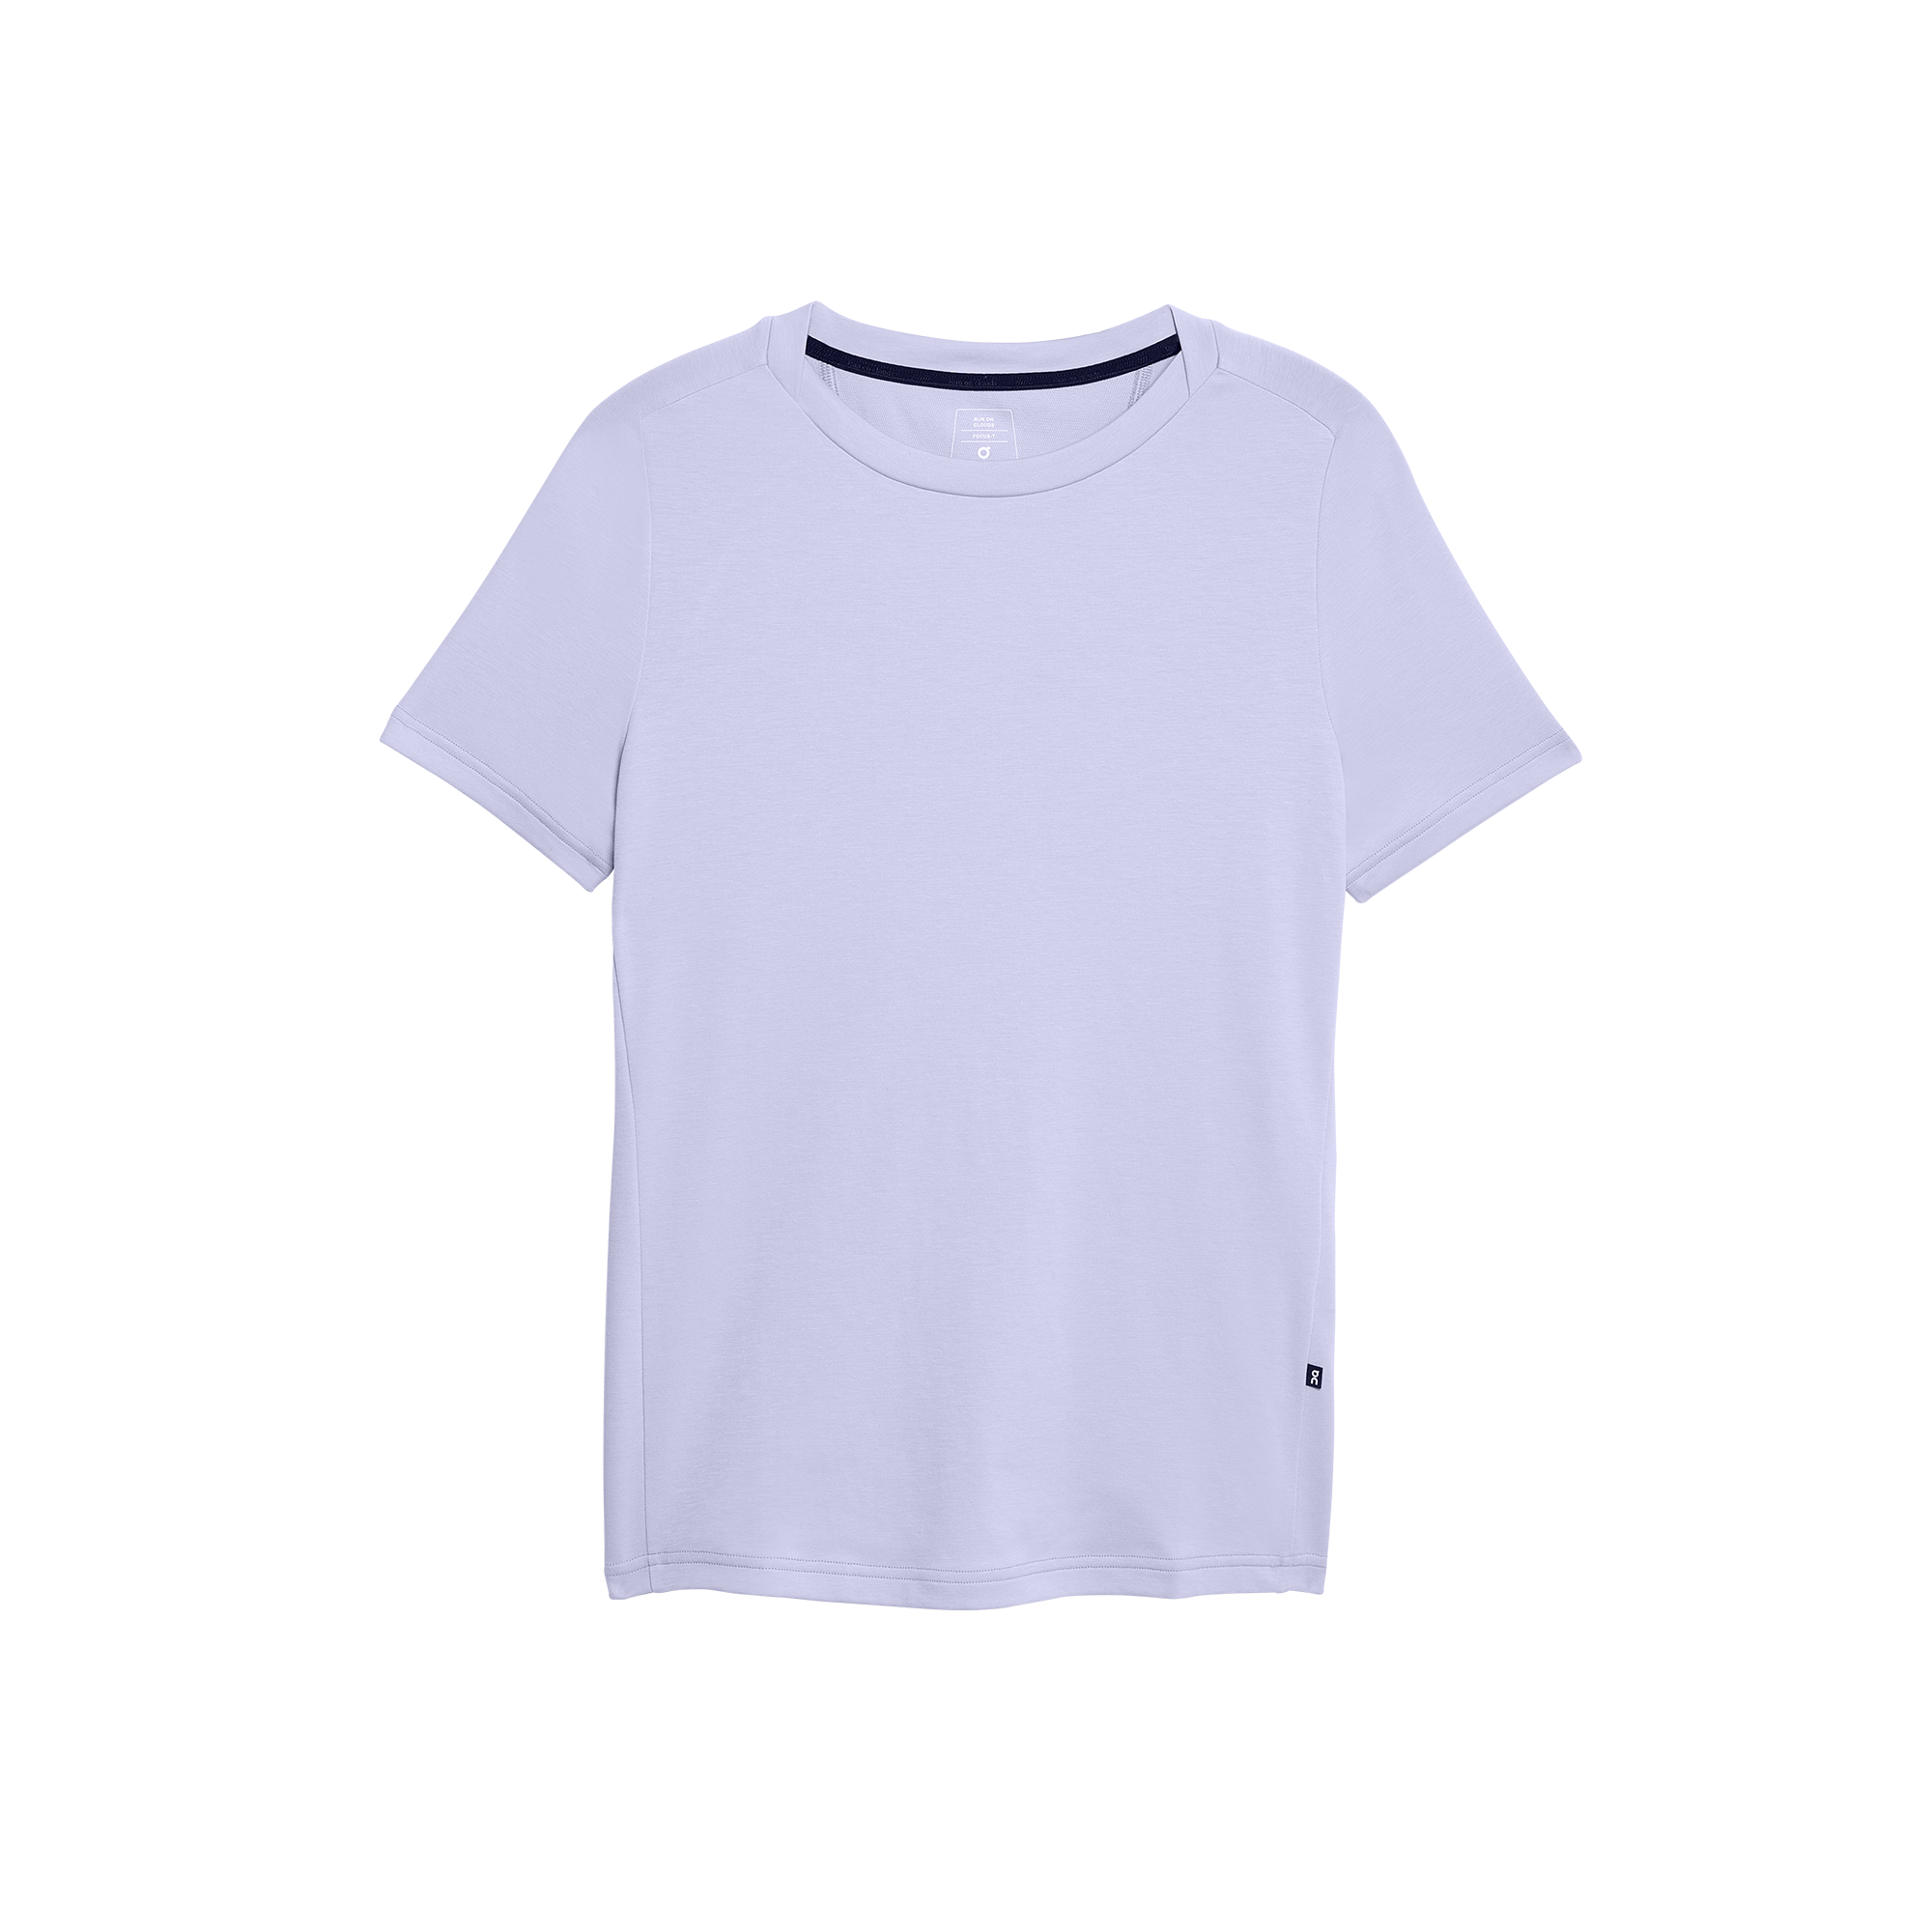 FOCUS Cotton Women's T-shirt / 100% Cotton / Polka Dot 